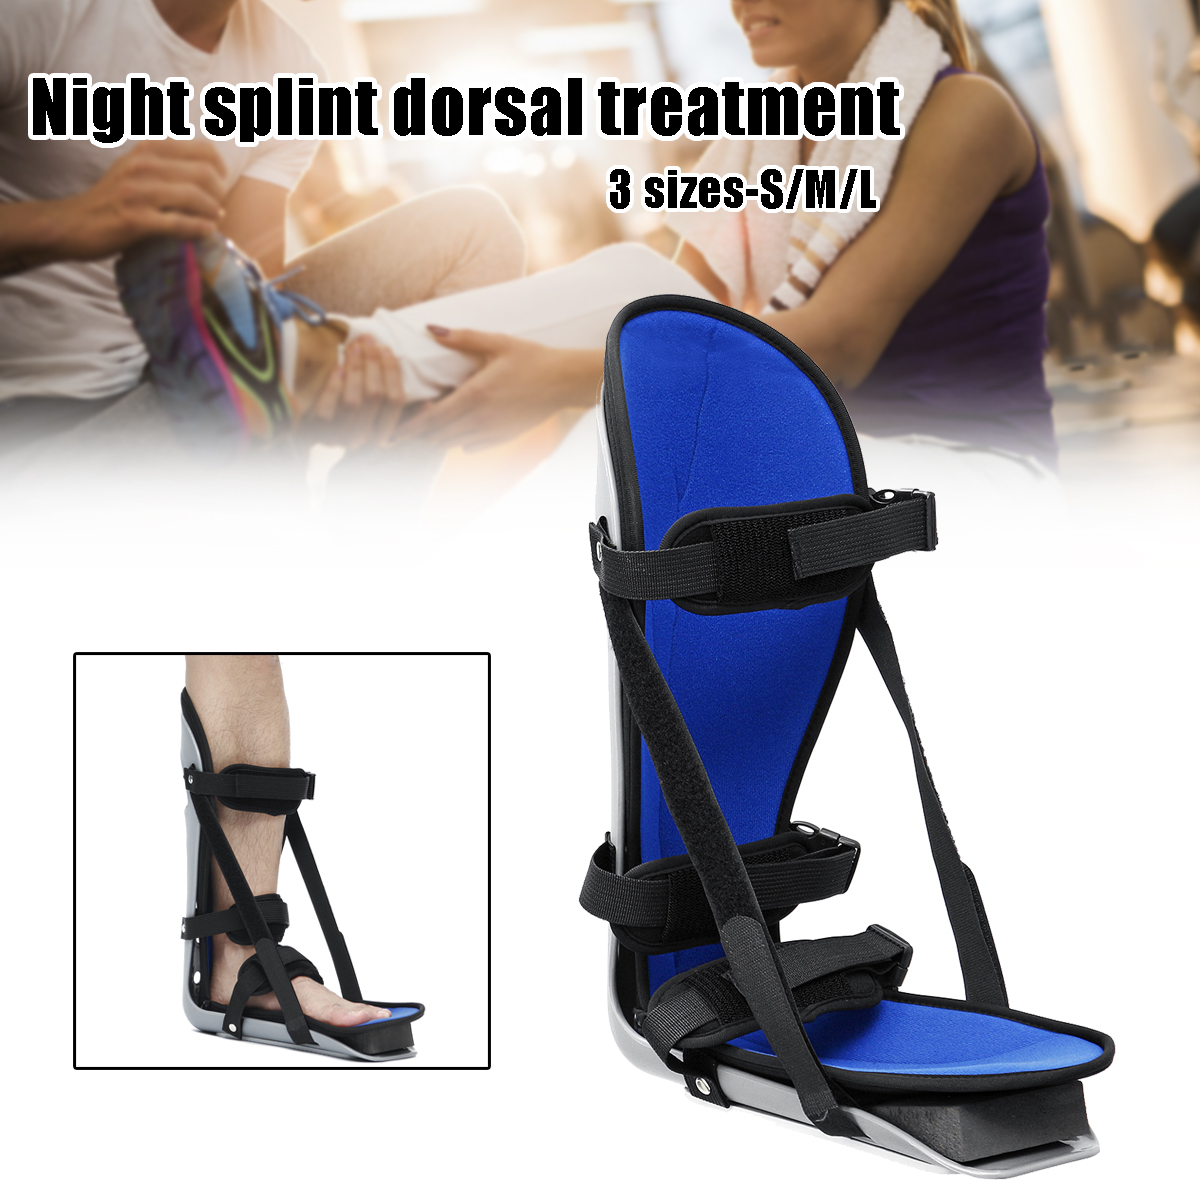 Night-Splint-Orthopaedic-Foot-Support-Rehab-Treatment-For-Plantar-Fasciitis-Achilles-Drop-Foot-Pain-1284164-1